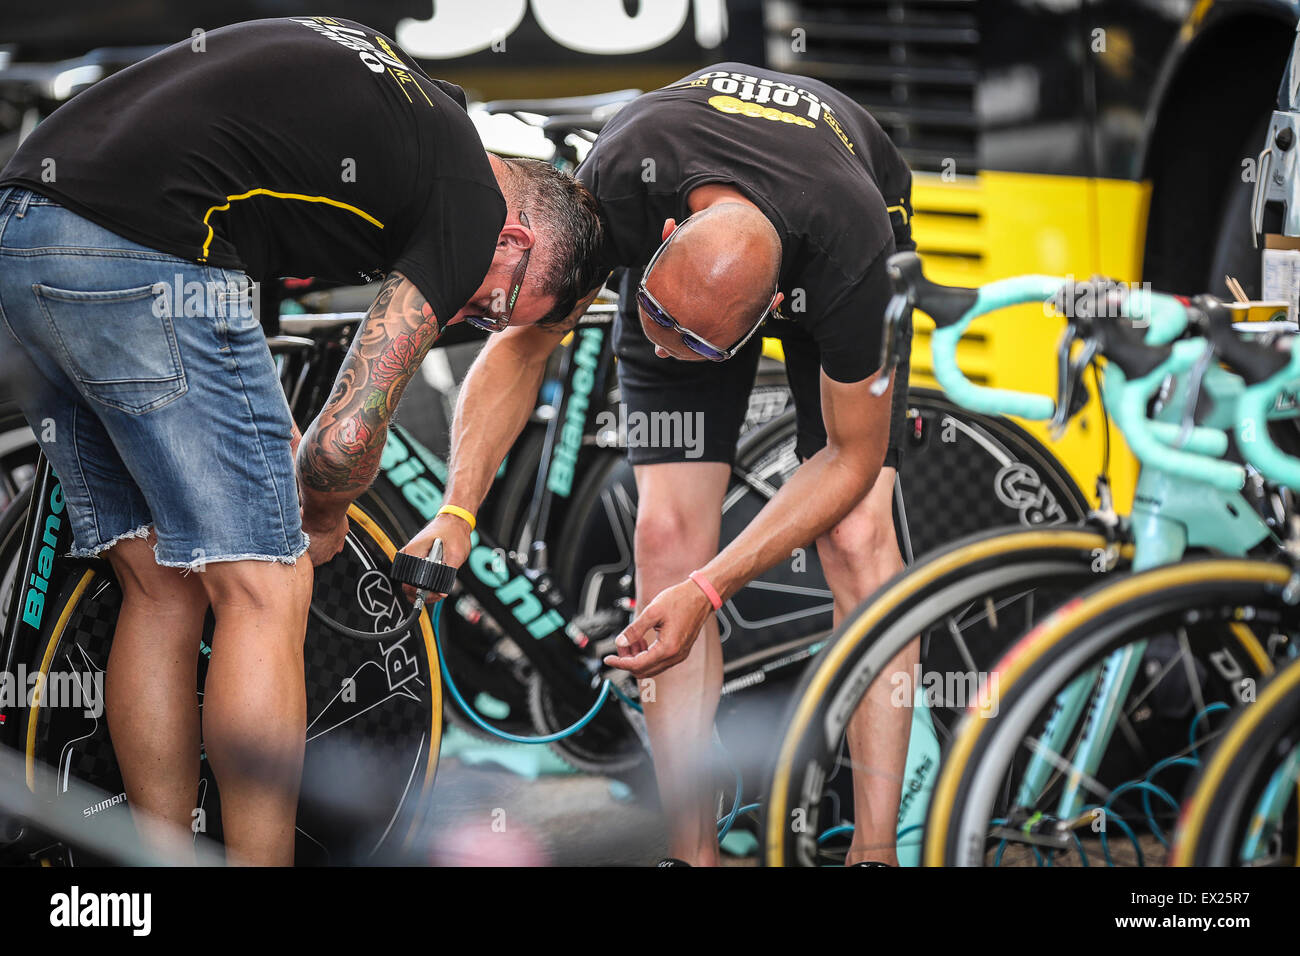 Utrecht, Paesi Bassi. 4 Luglio, 2015. Tour de France Time Trial Stage, Team Lotto Jumbo Credito: Jan de Wild/Alamy Live News Foto Stock